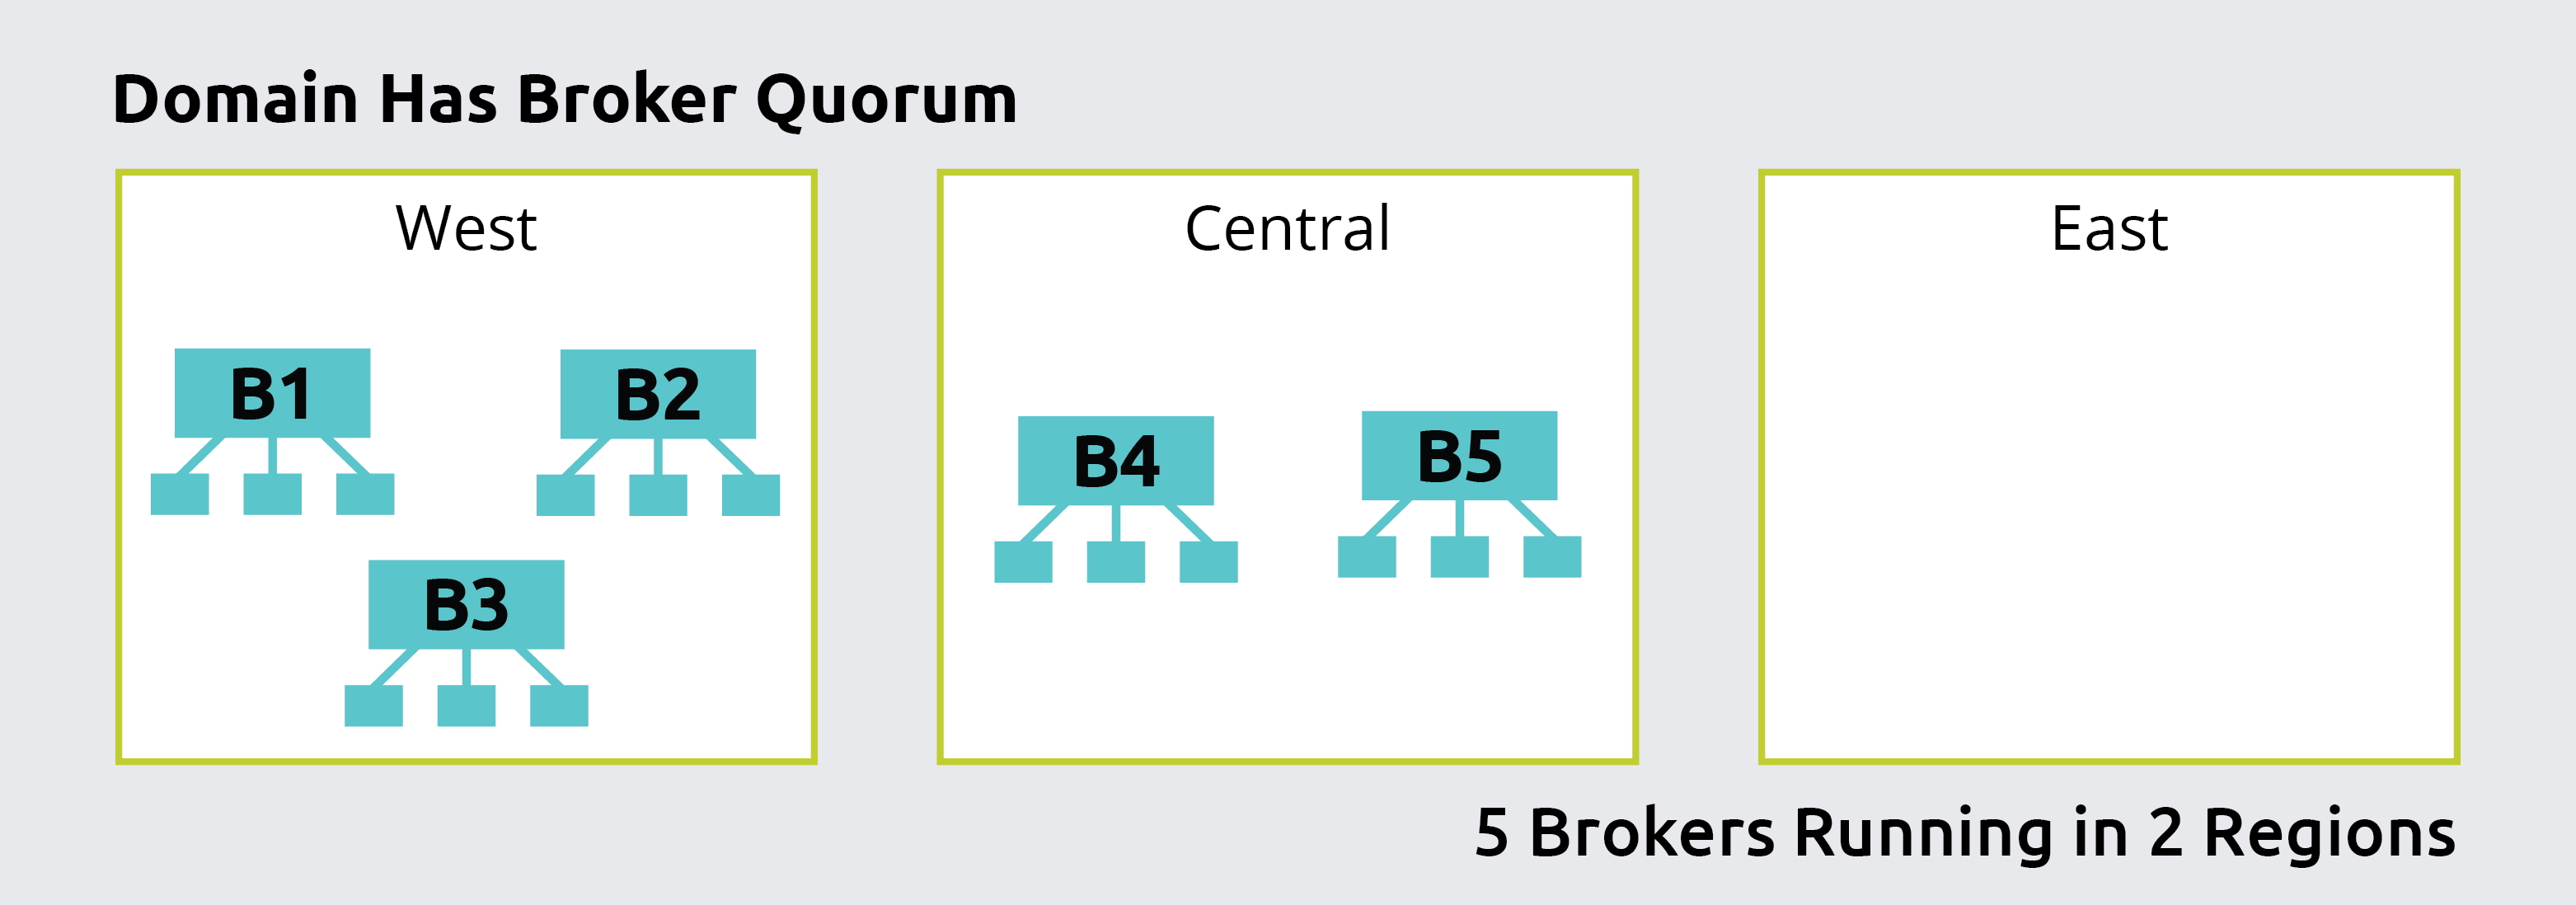 Broker Quorum Graphic 02